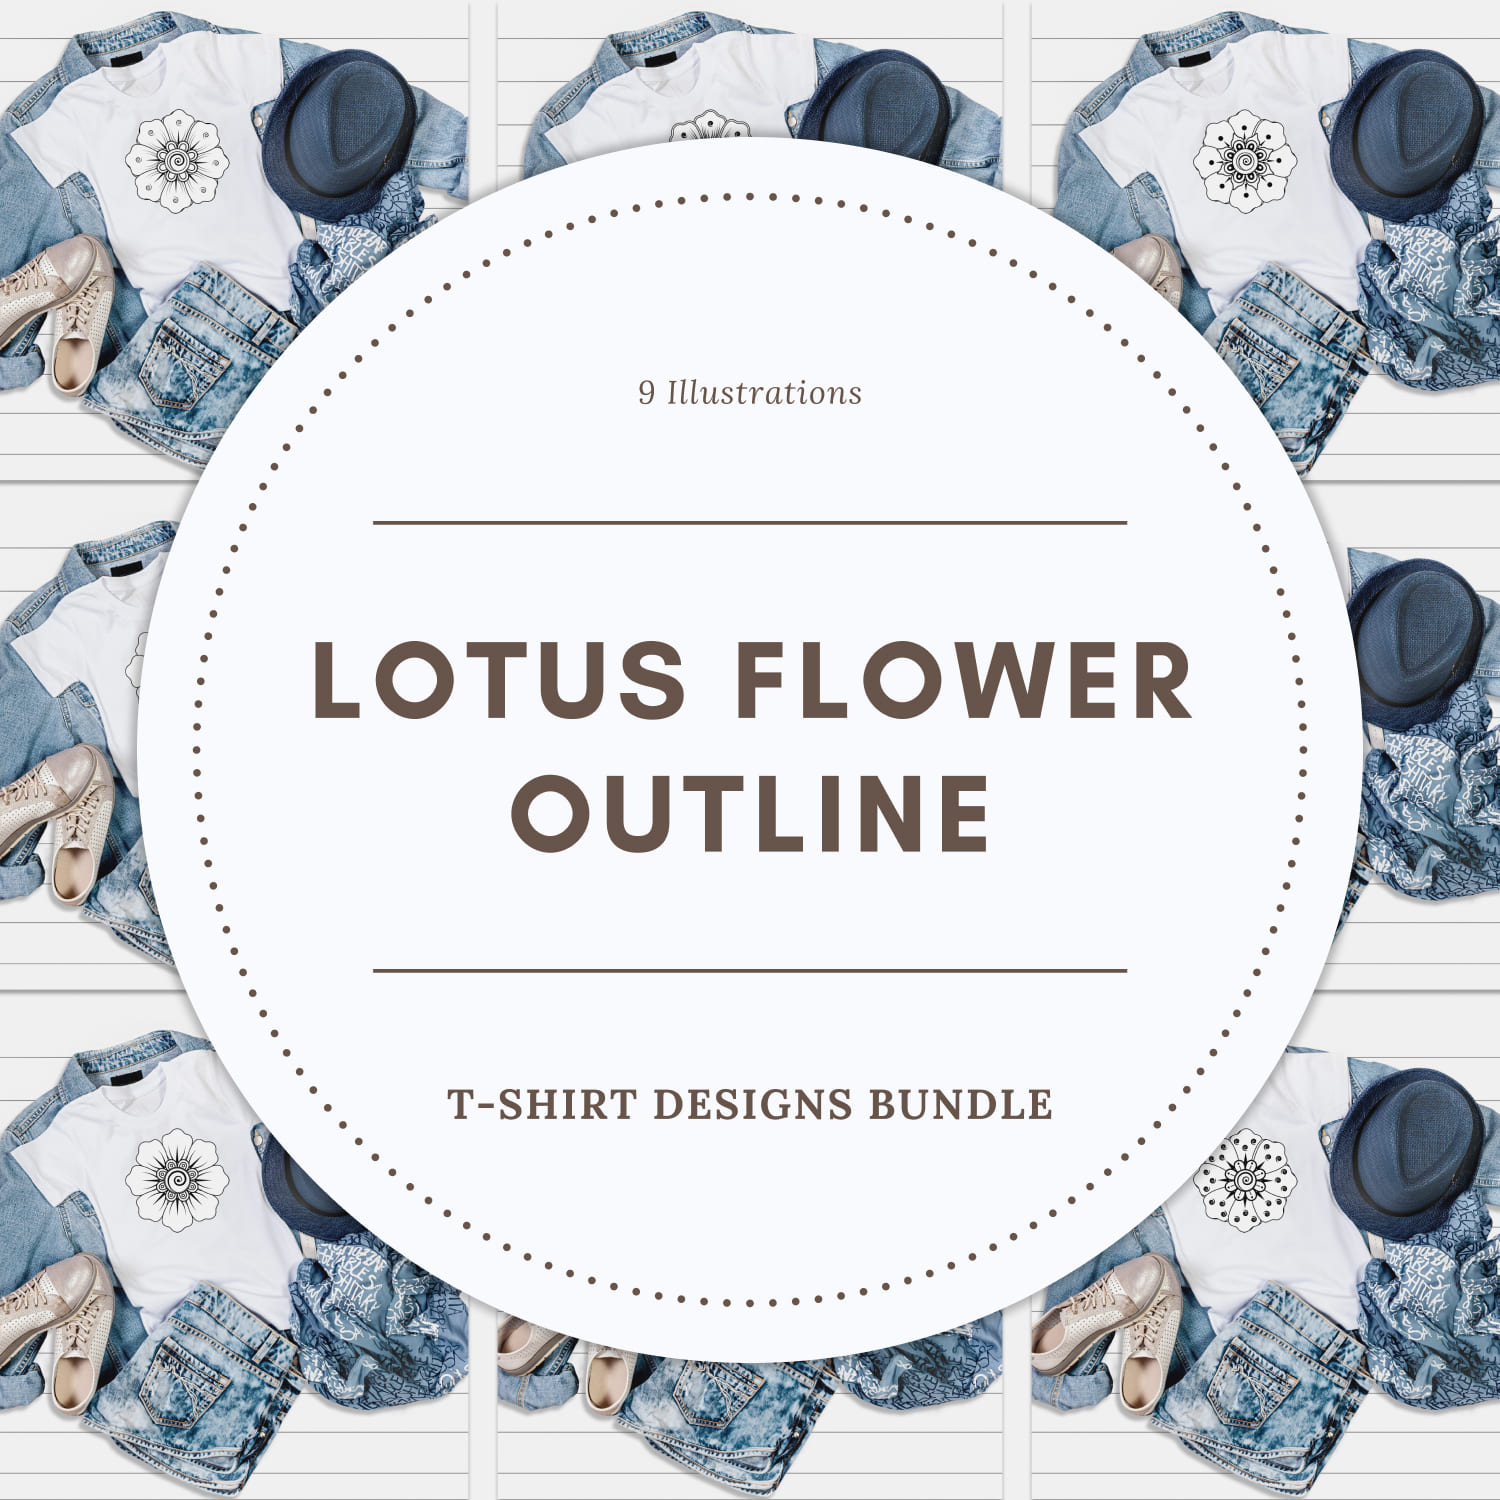 Lotus Flower Outline T-shirt Designs Bundle.